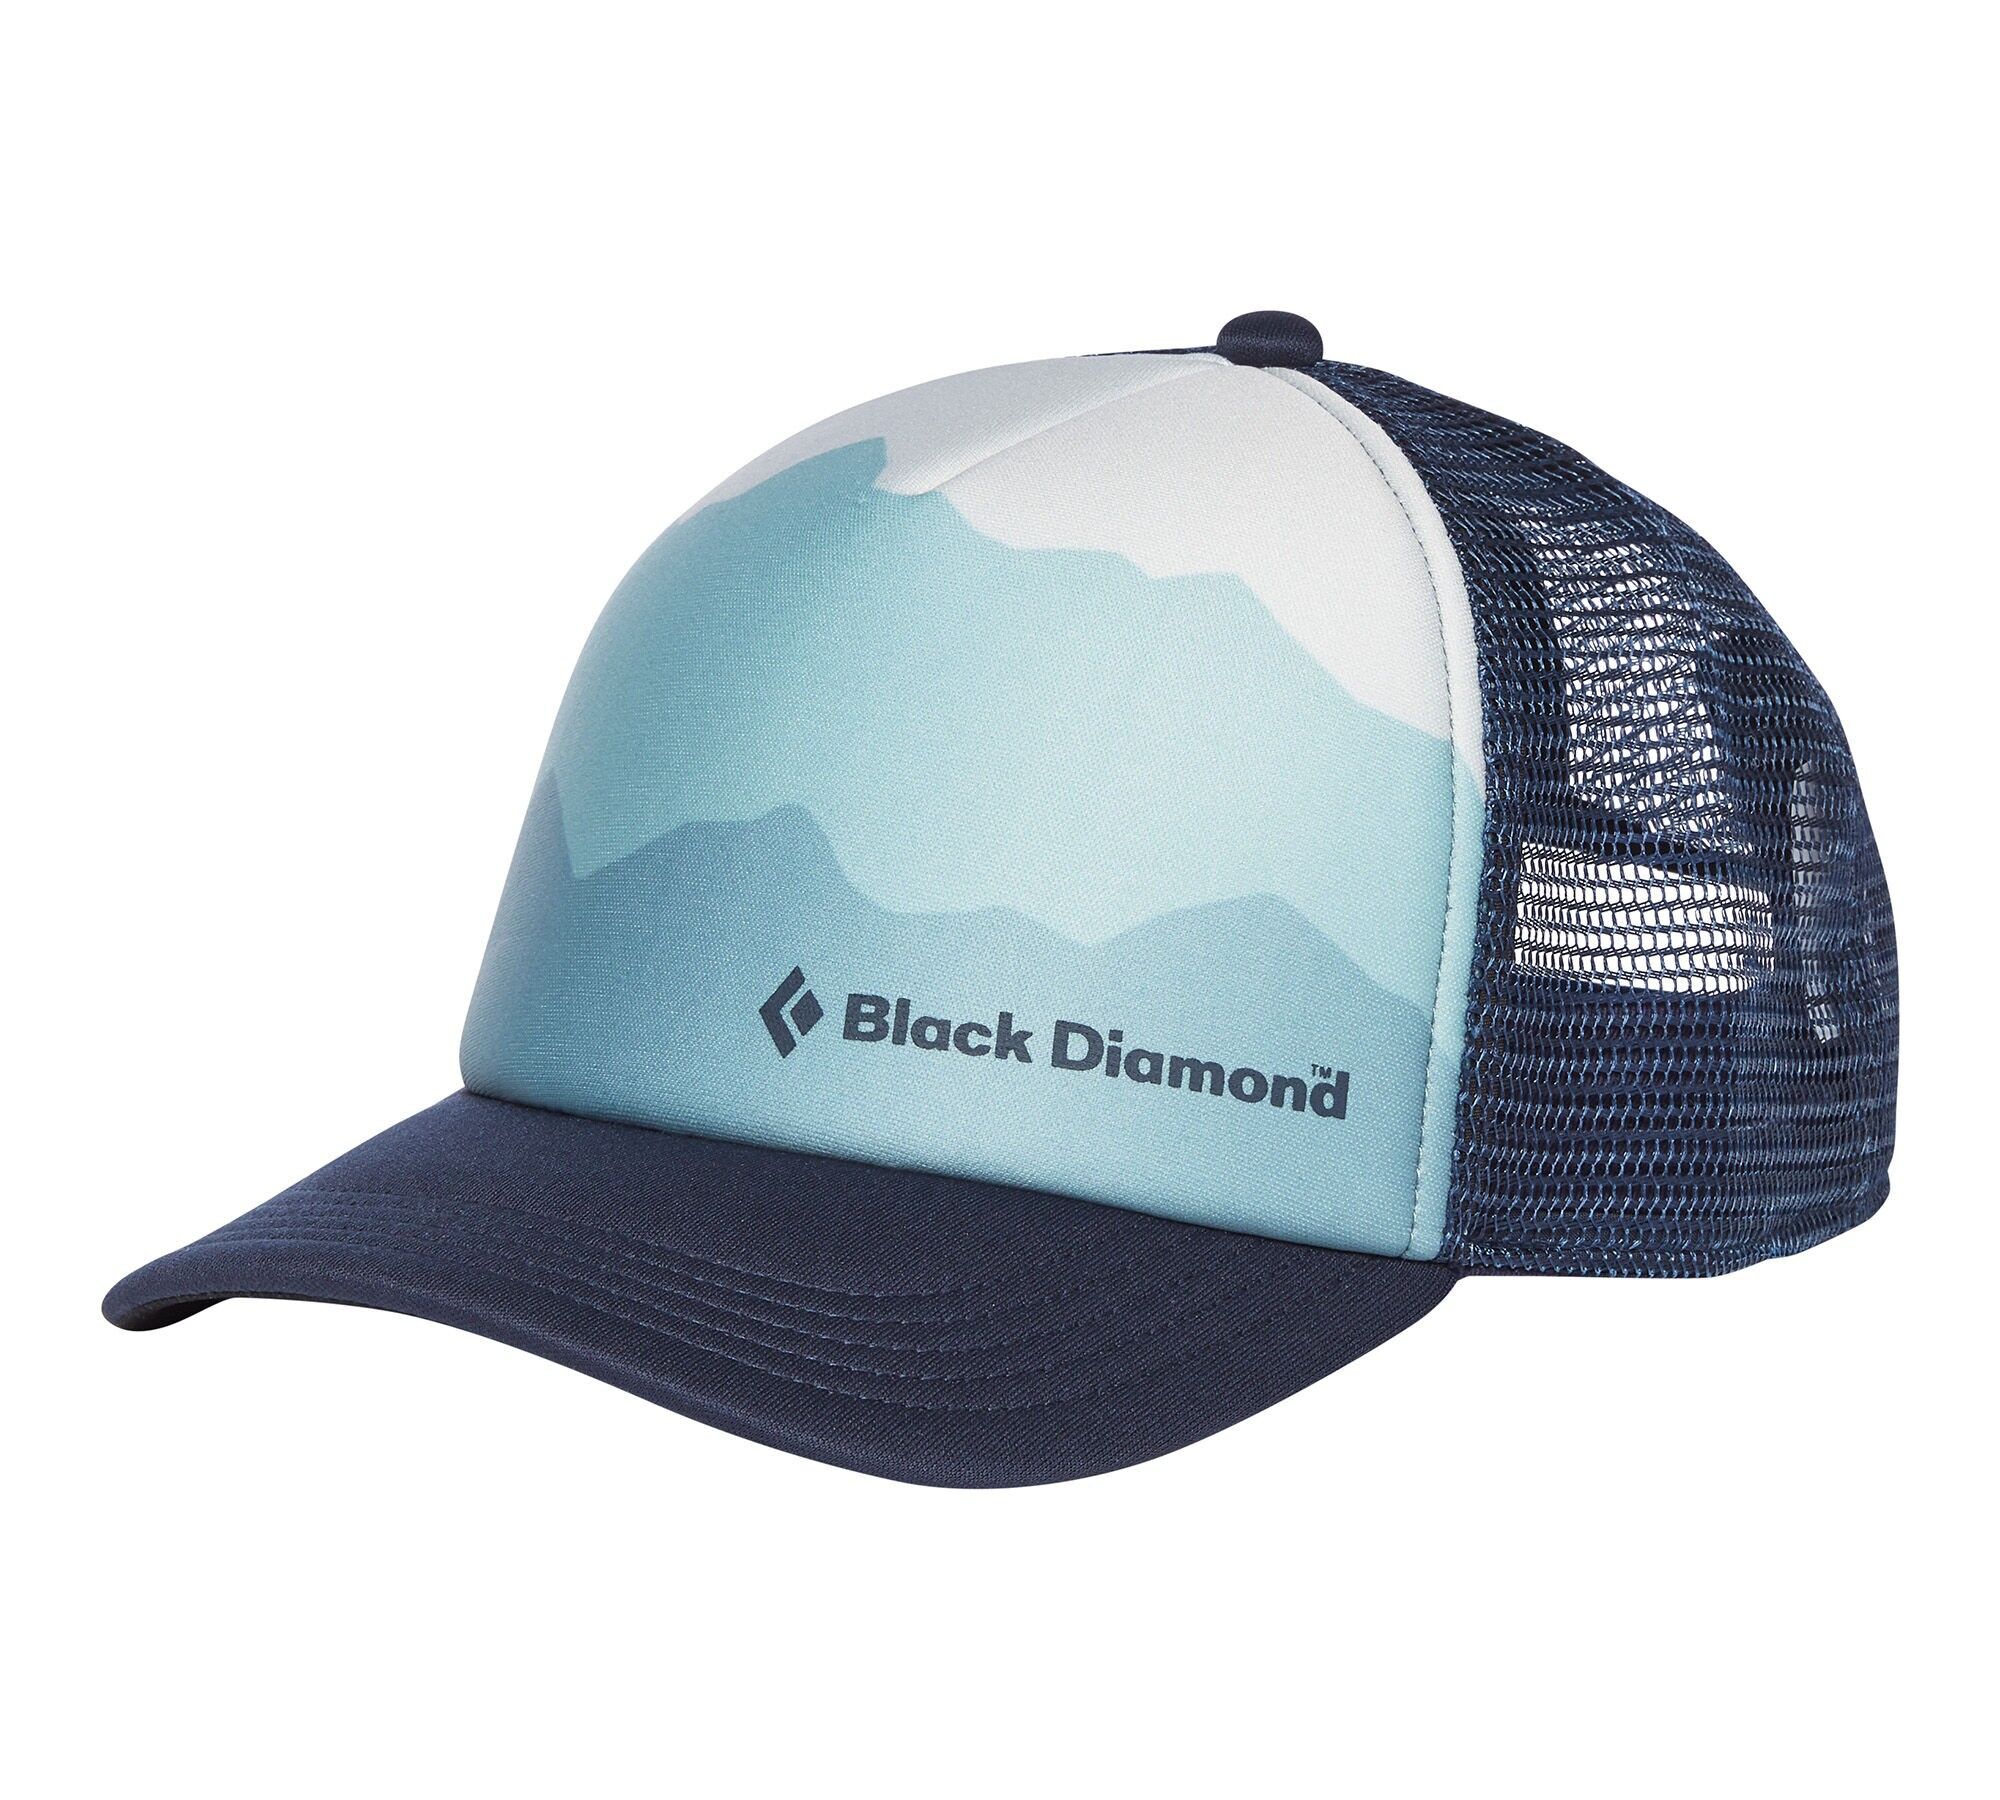 Black Diamond Trucker Hat - Pet